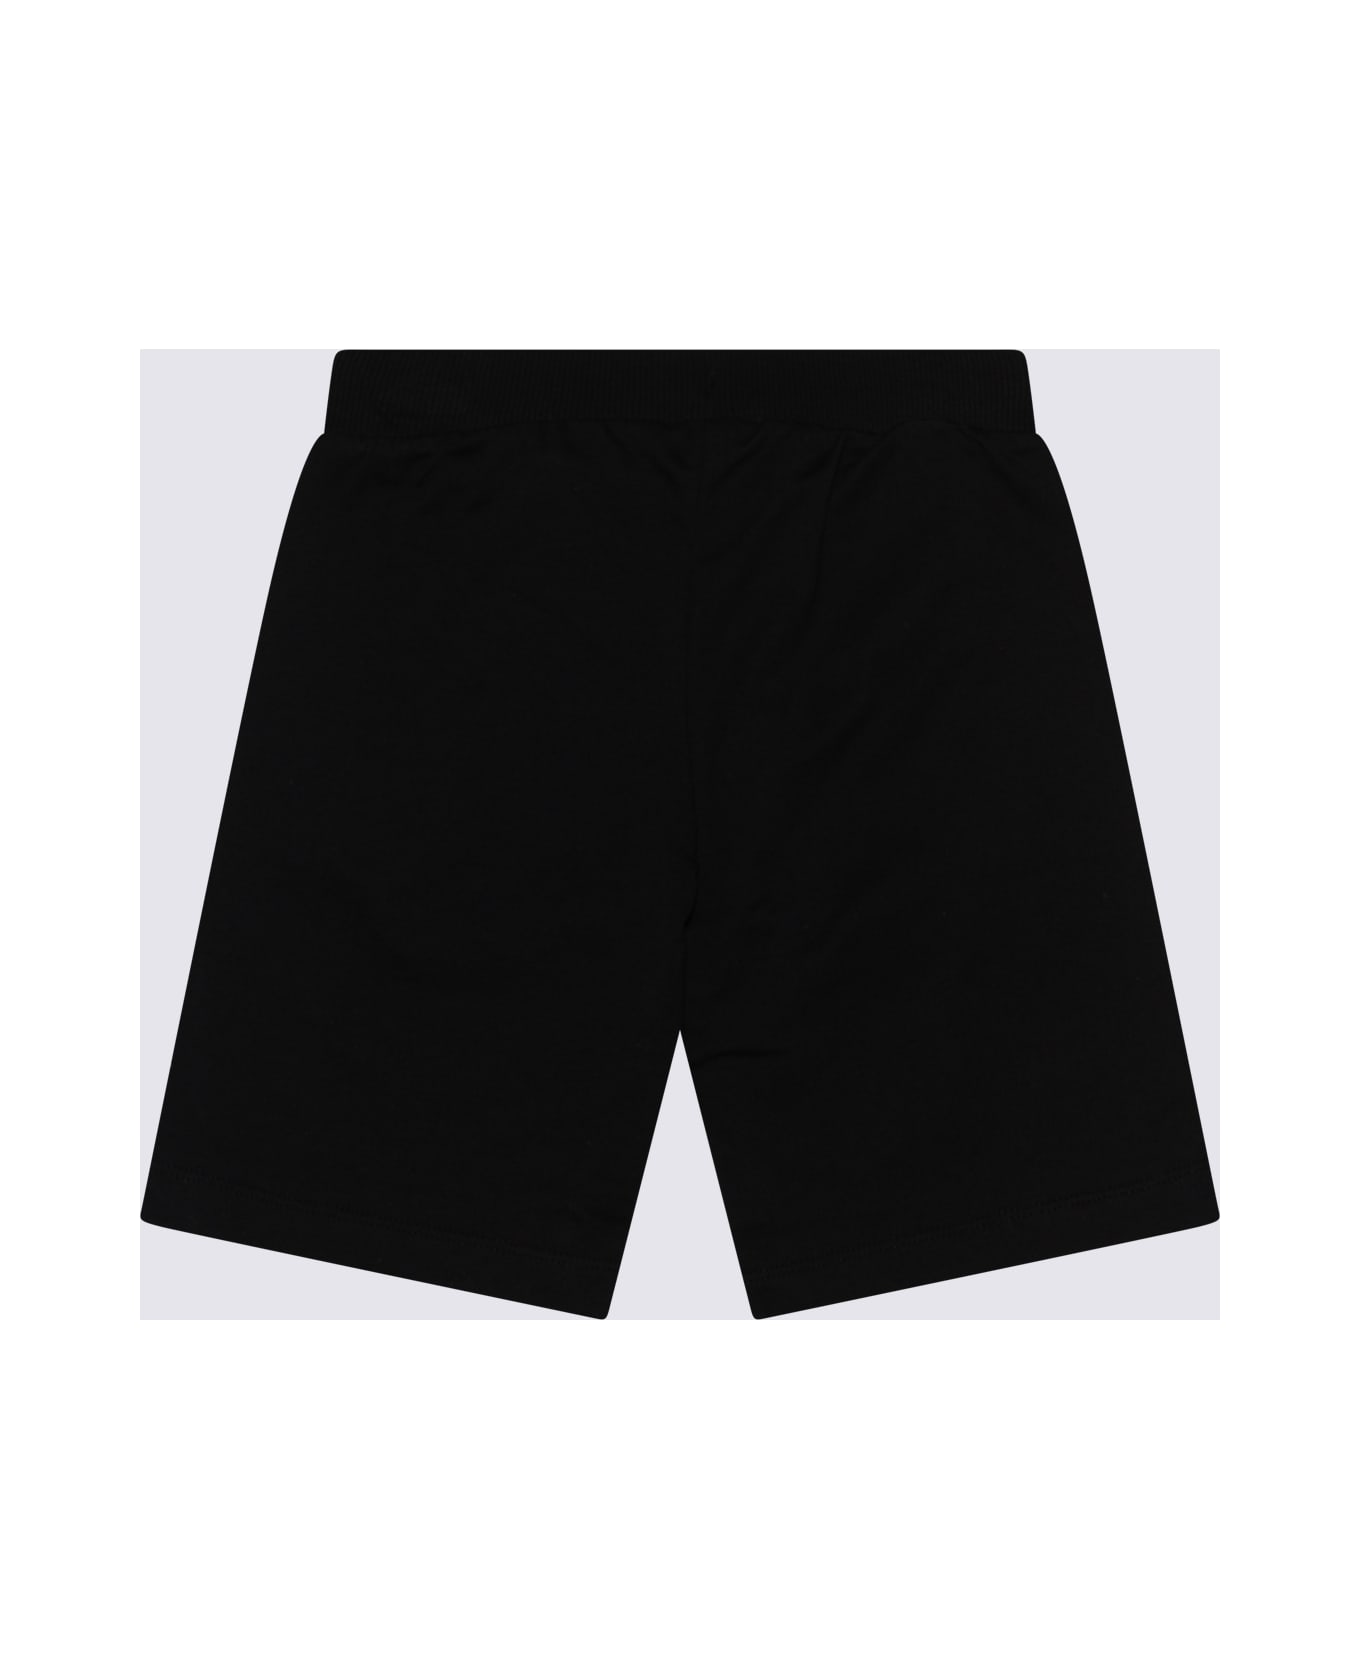 Moschino Black Cotton Shorts - Black ボトムス